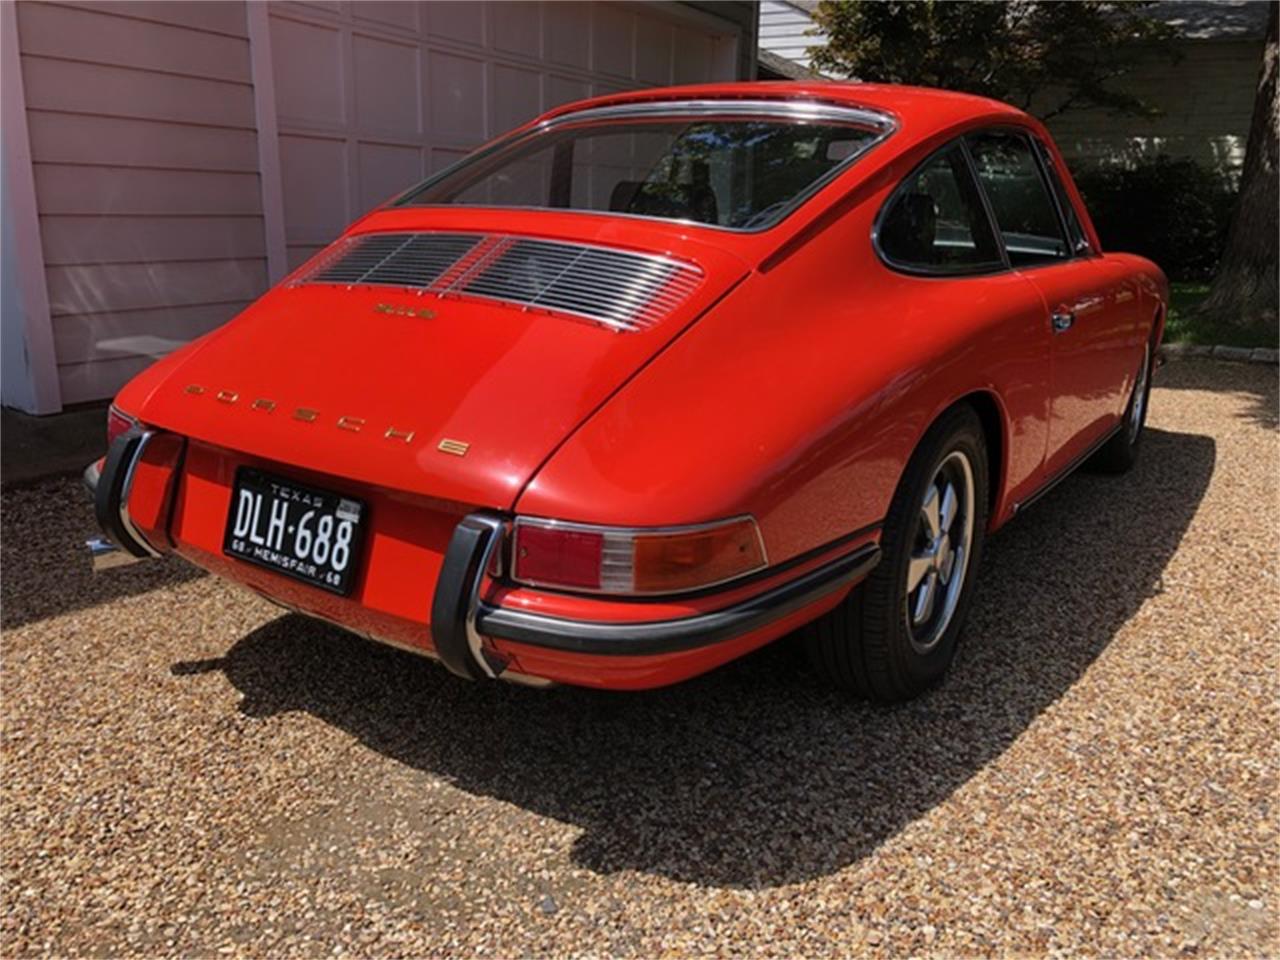 1968 Porsche 911 for sale in okc, OK